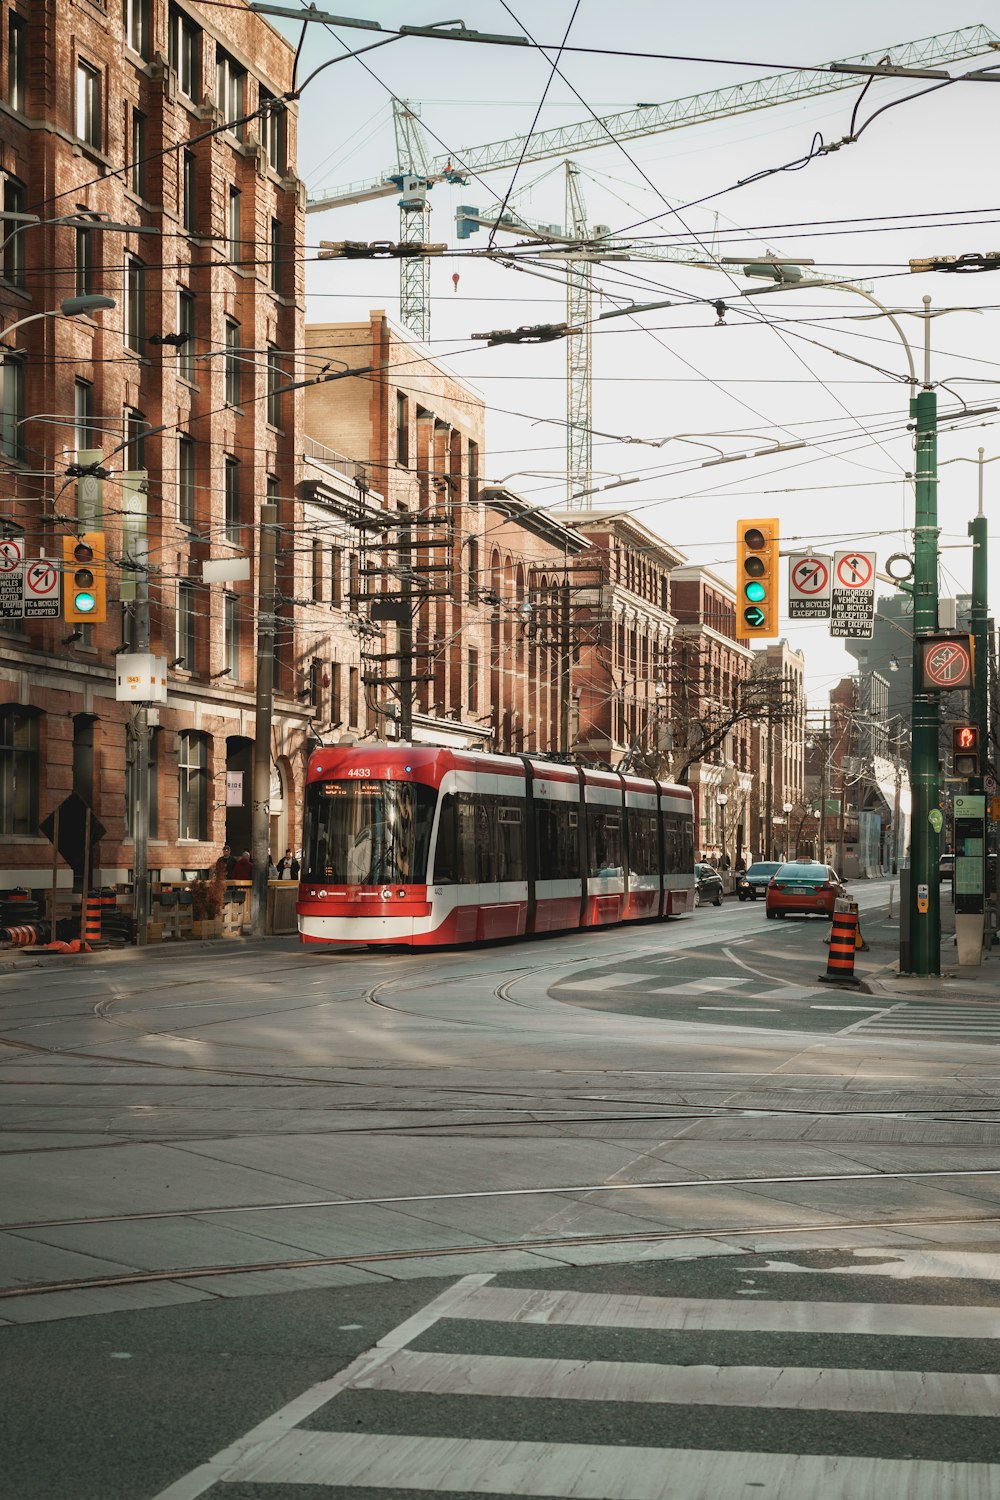 a trolley on a city street